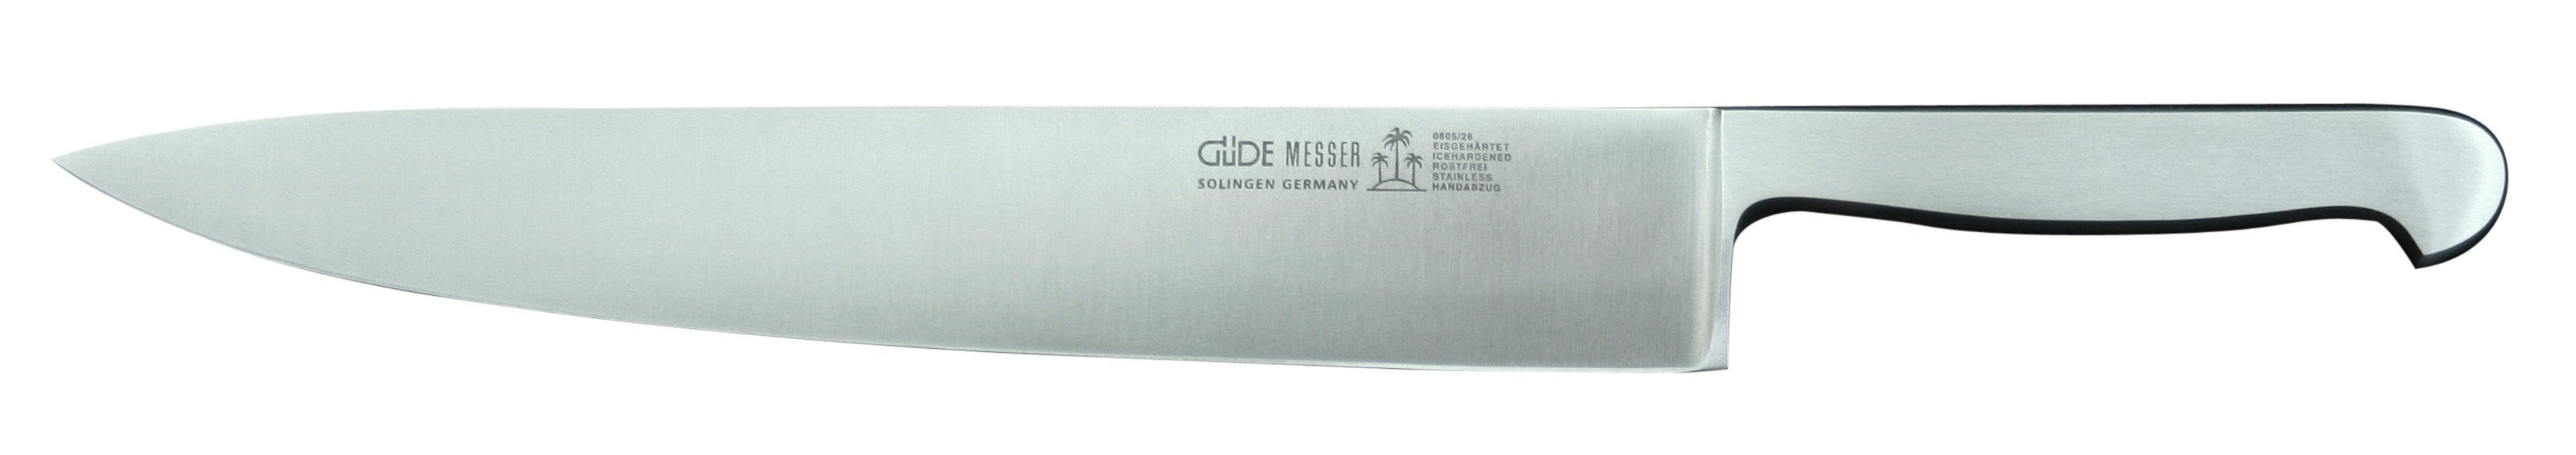 Güde Messer Solingen Kochmesser Kappa, Kochmesser 26 cm - Klinge und Griff CVM-Stahl